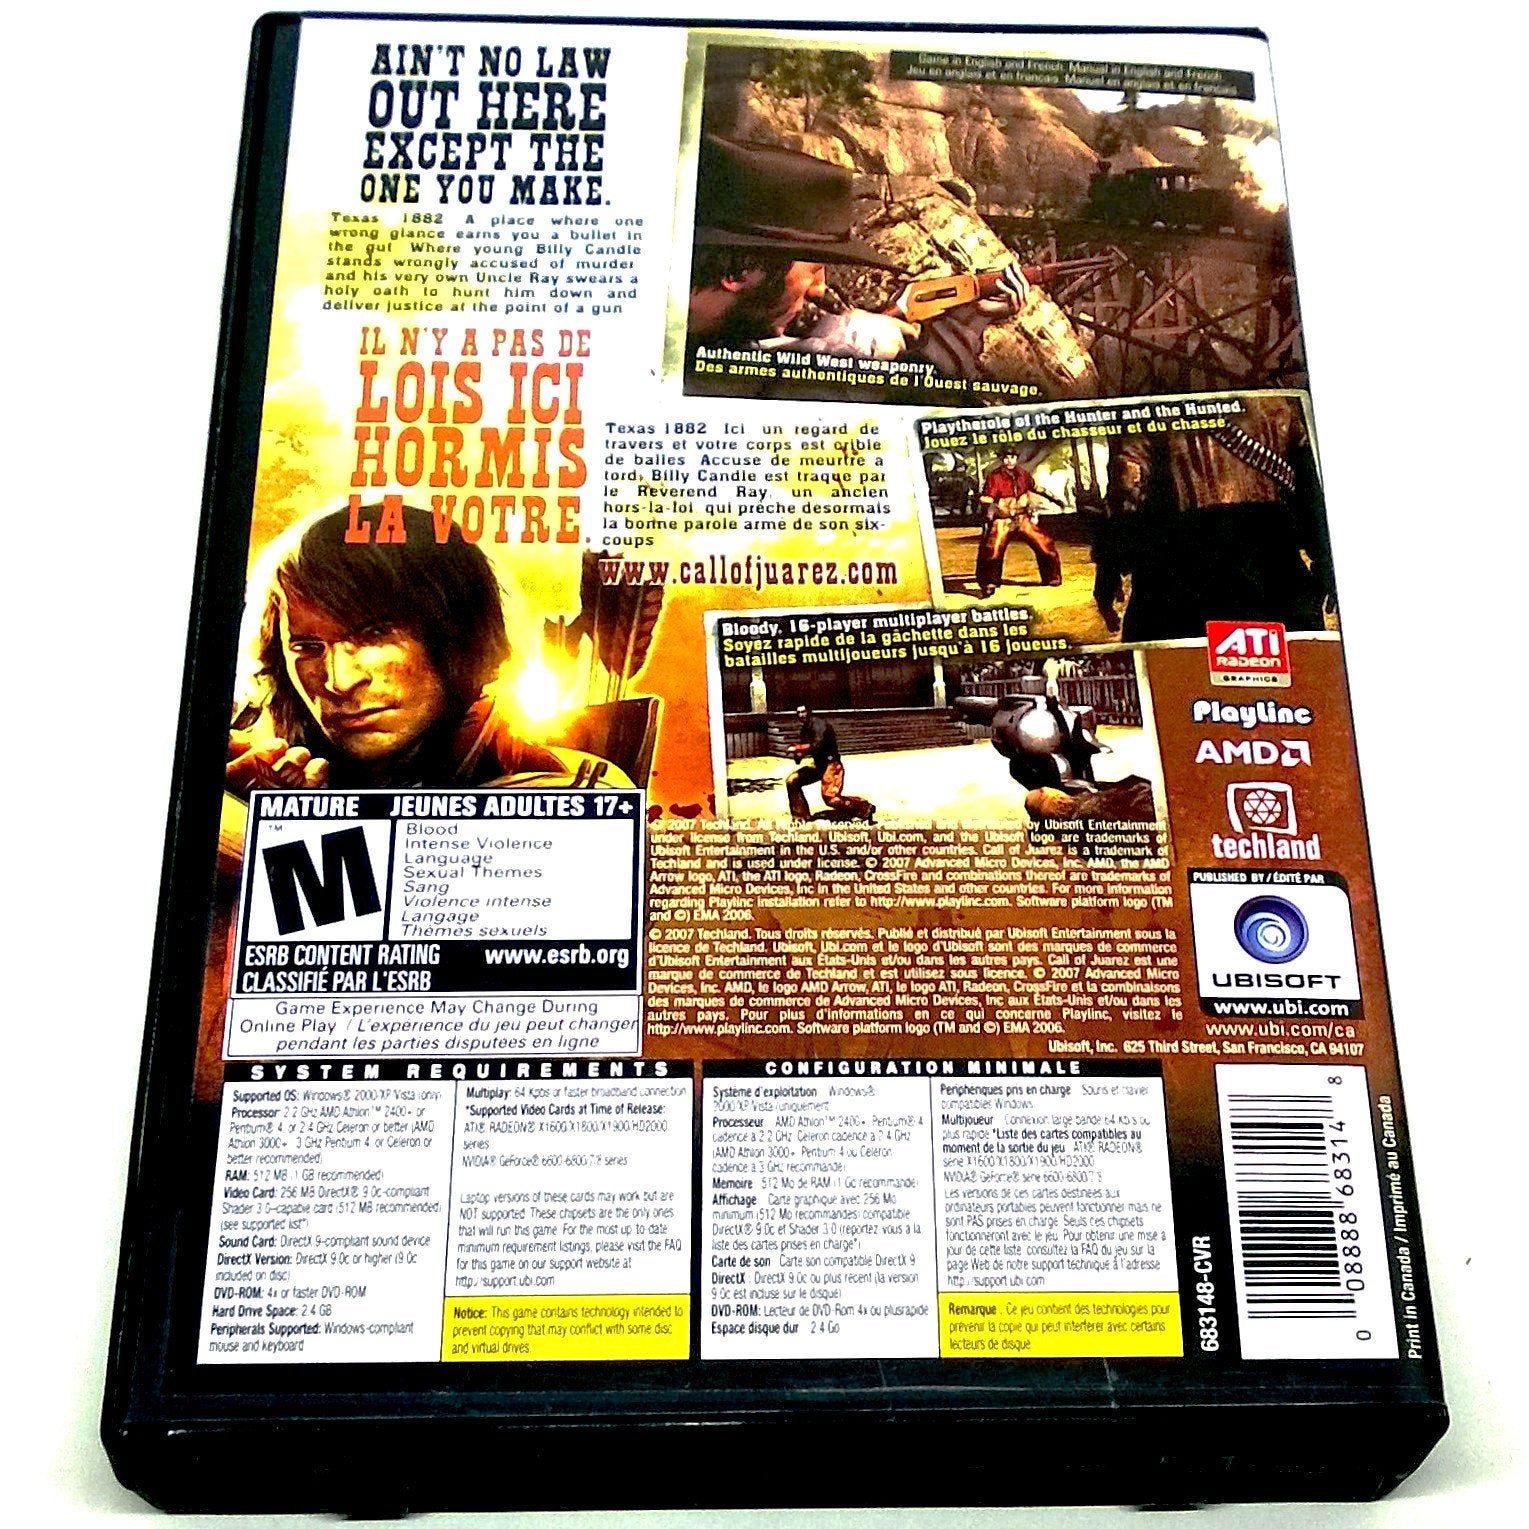 Call of Juarez for PC DVD-ROM - Back of case